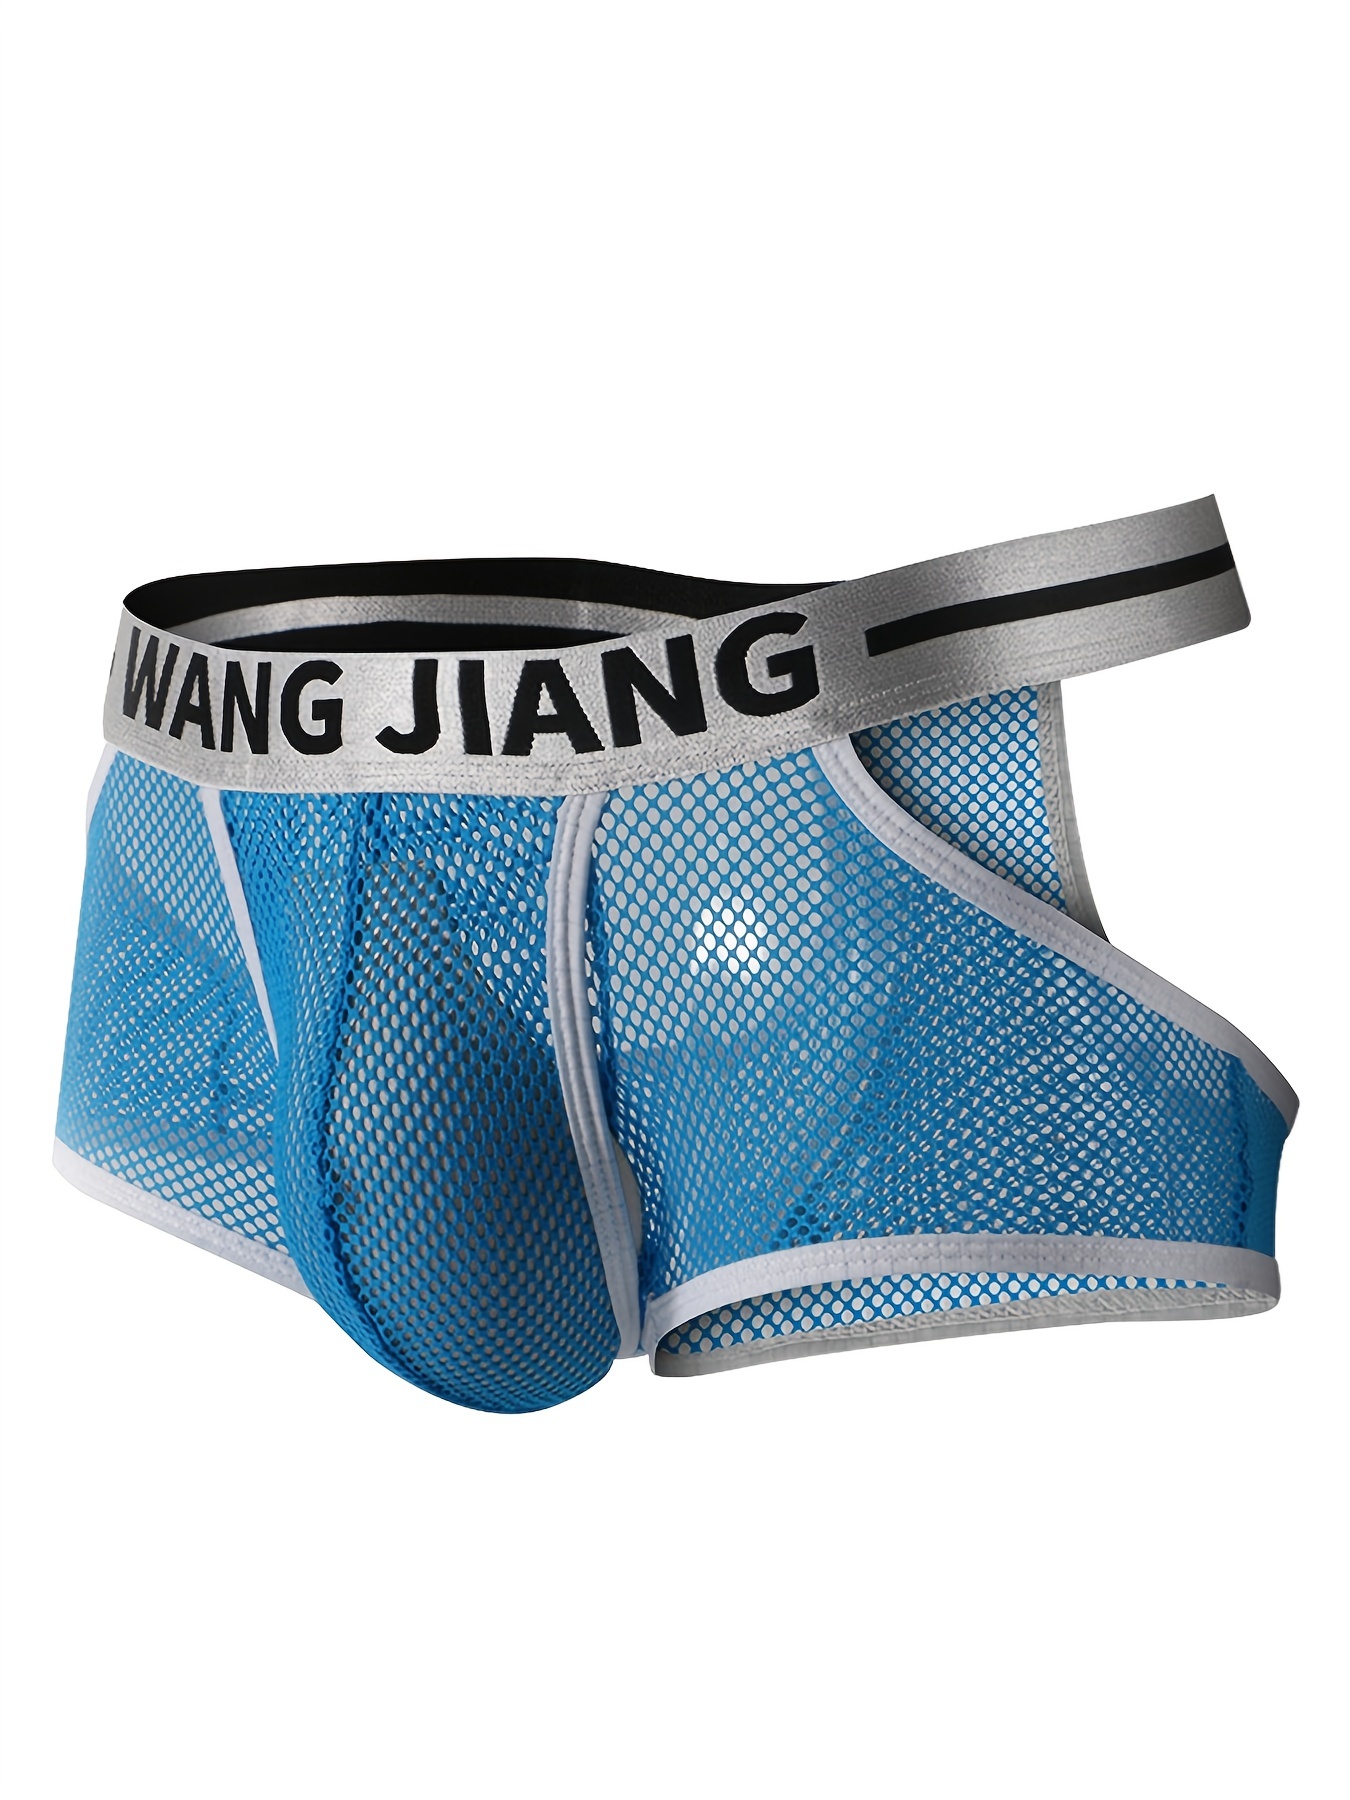 Underwear men's underwear mesh after empty breathable comfort pants  underpants bd16331